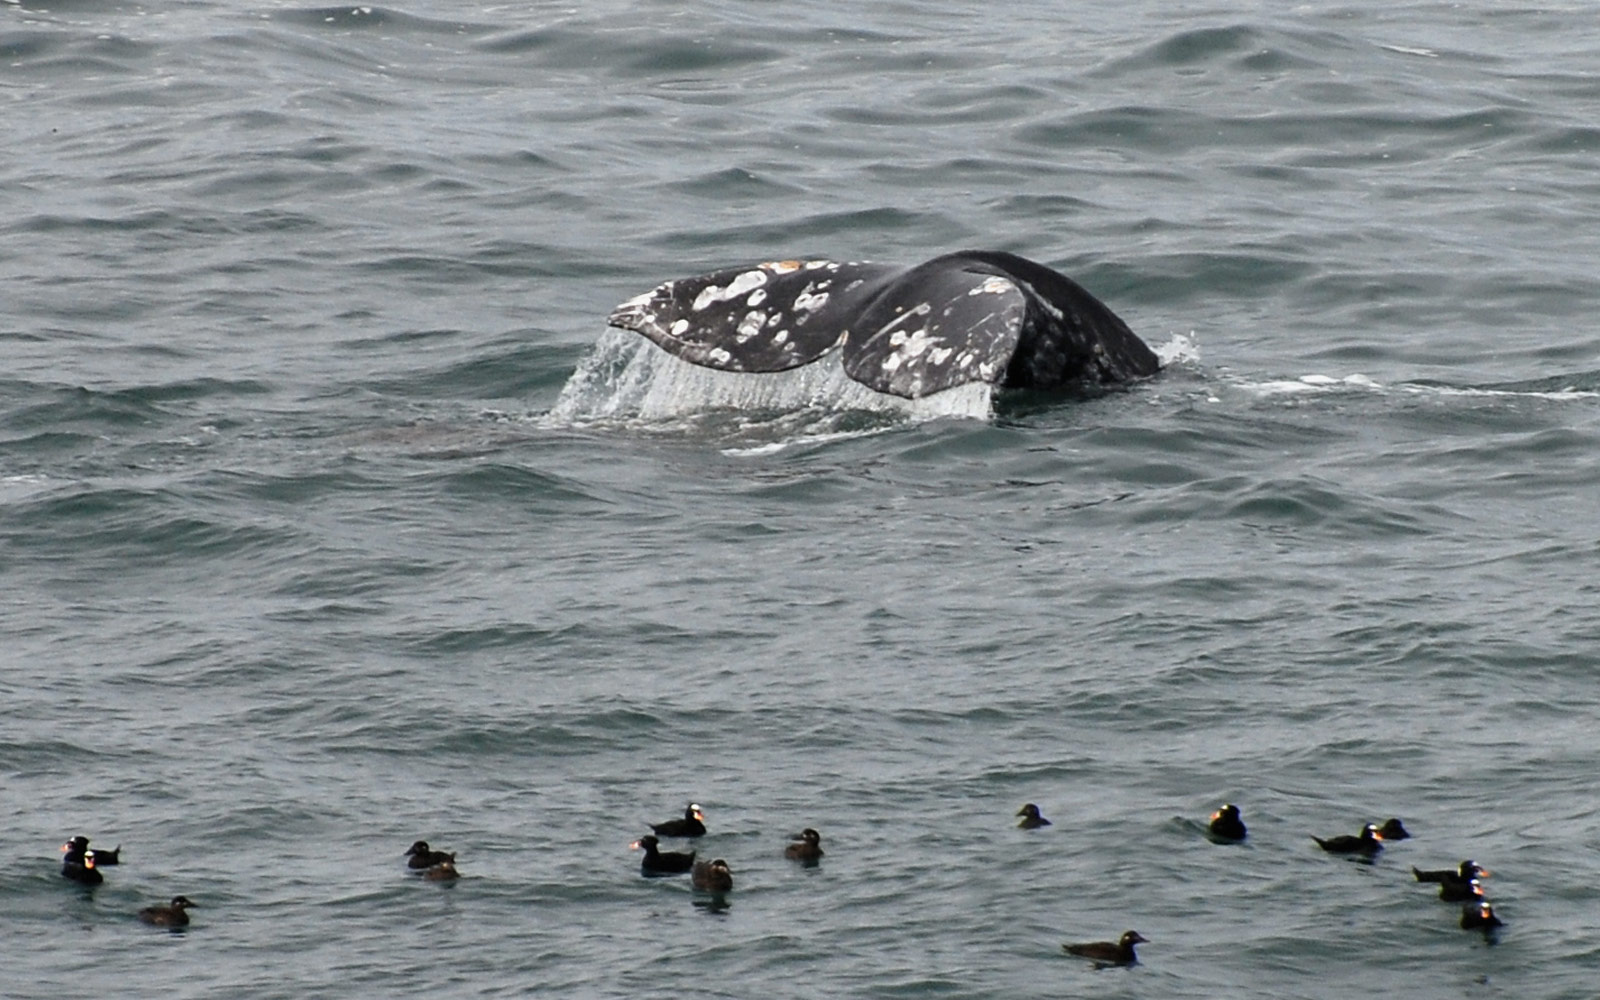 whale tour oregon coast